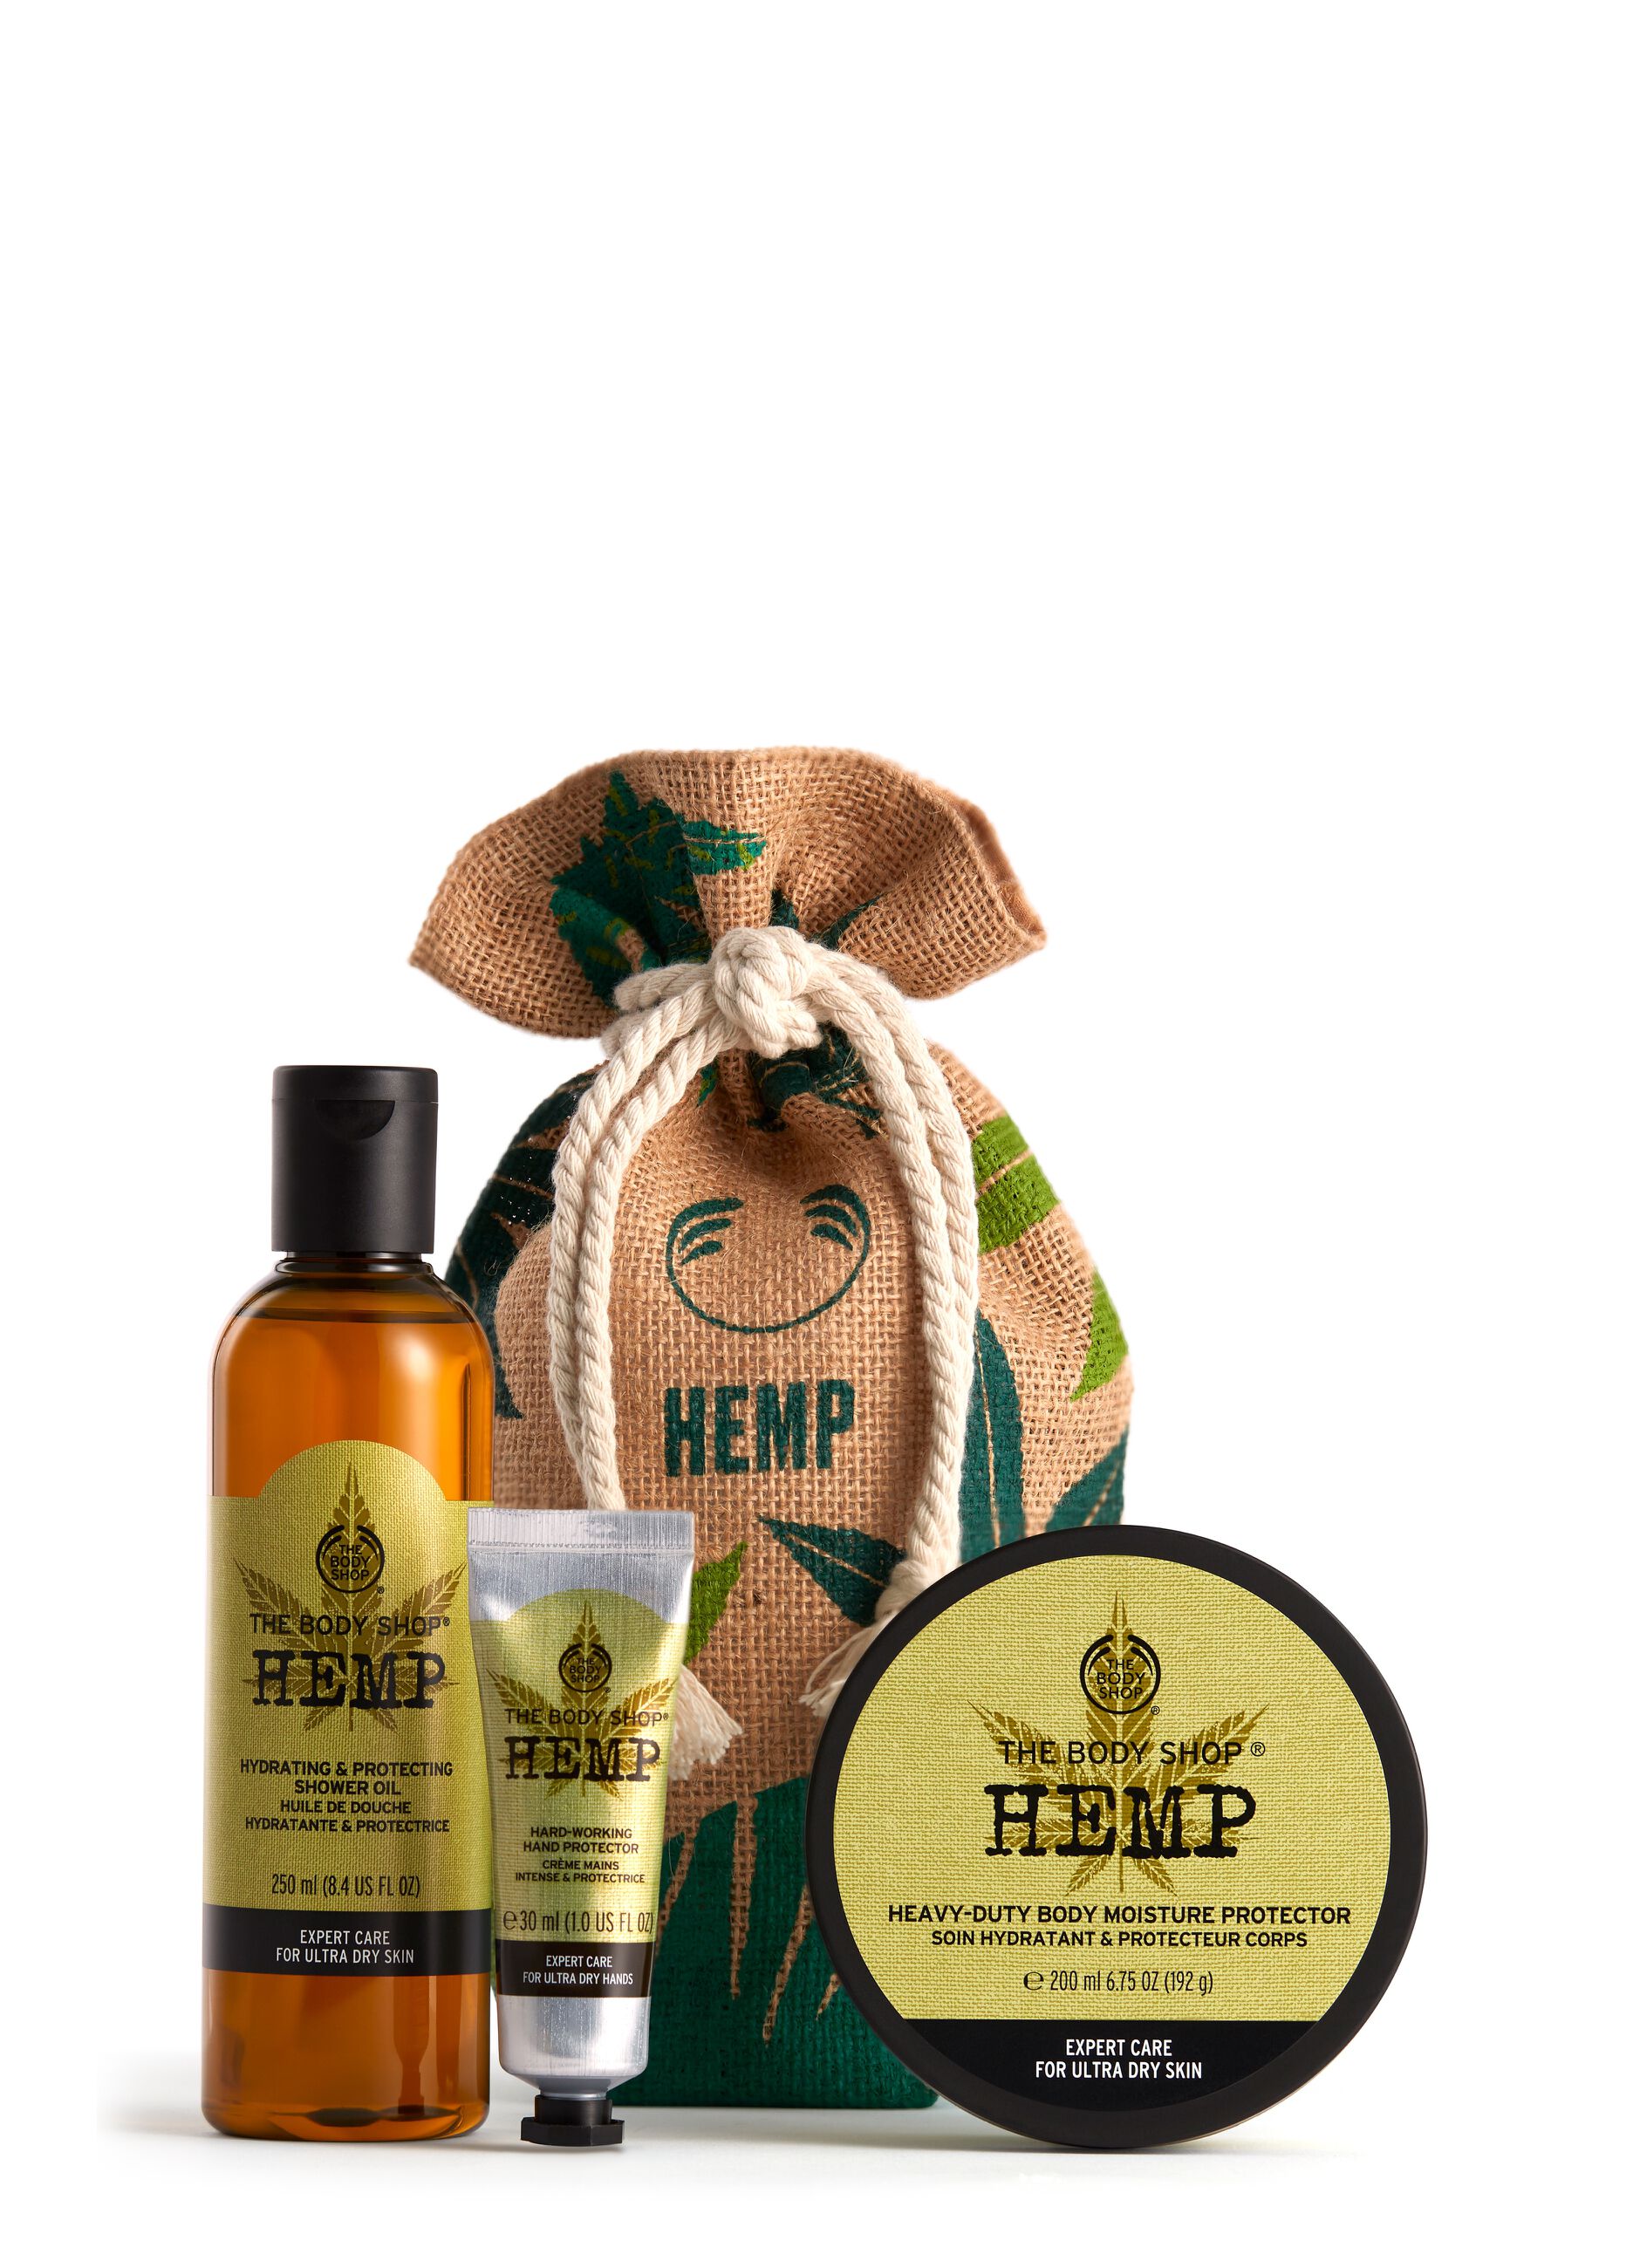 The Body Shop hemp body care gift box